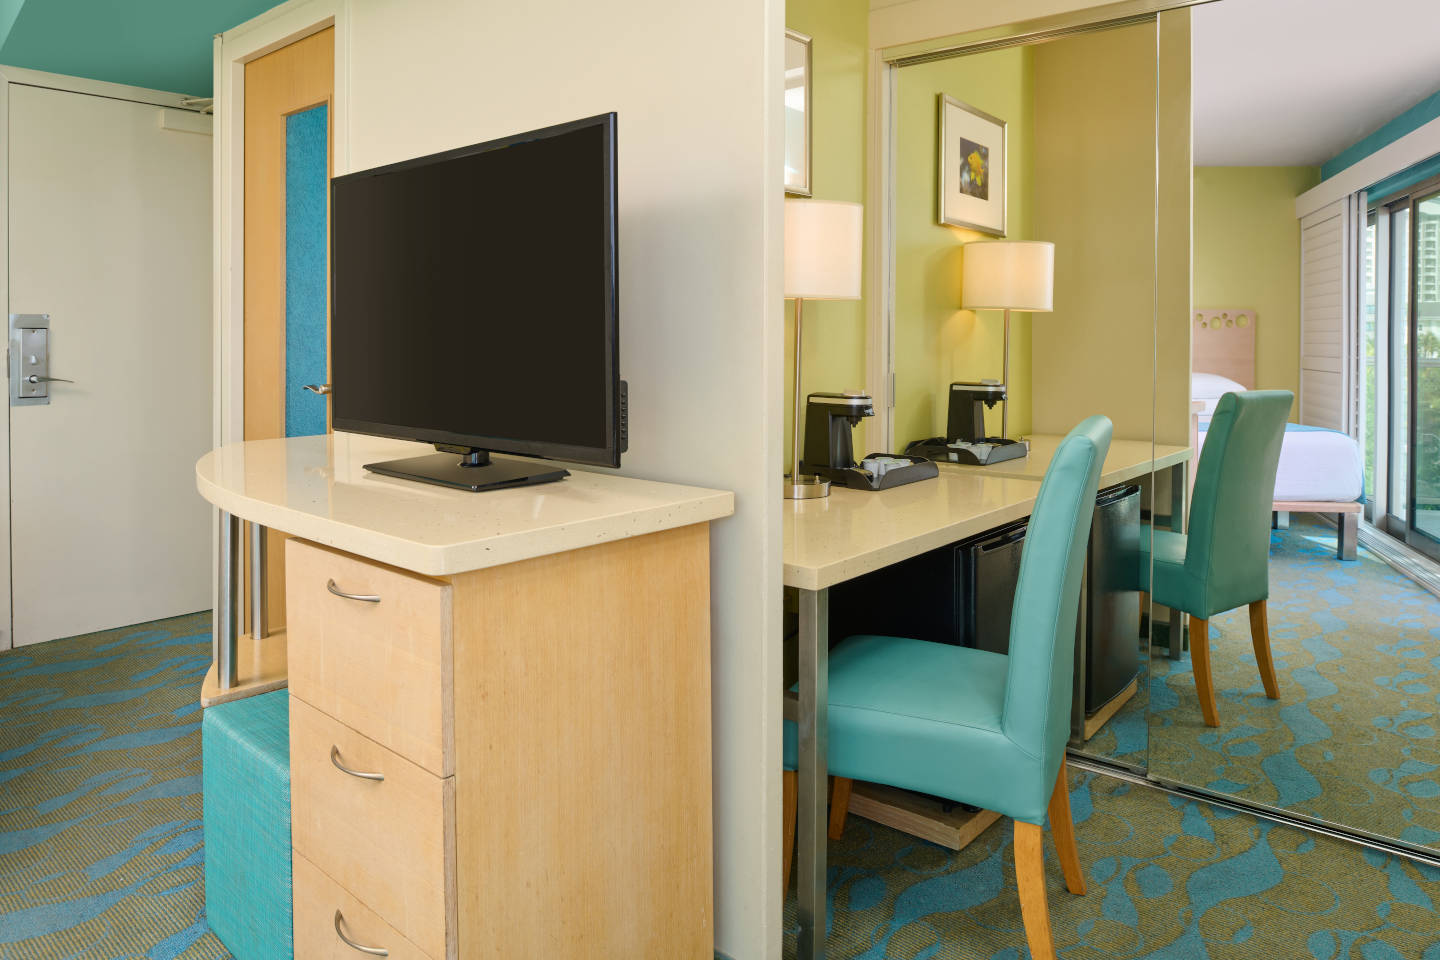 Standard Hotel Room at Aston Waikiki Circle Hotel with desk seating and television 